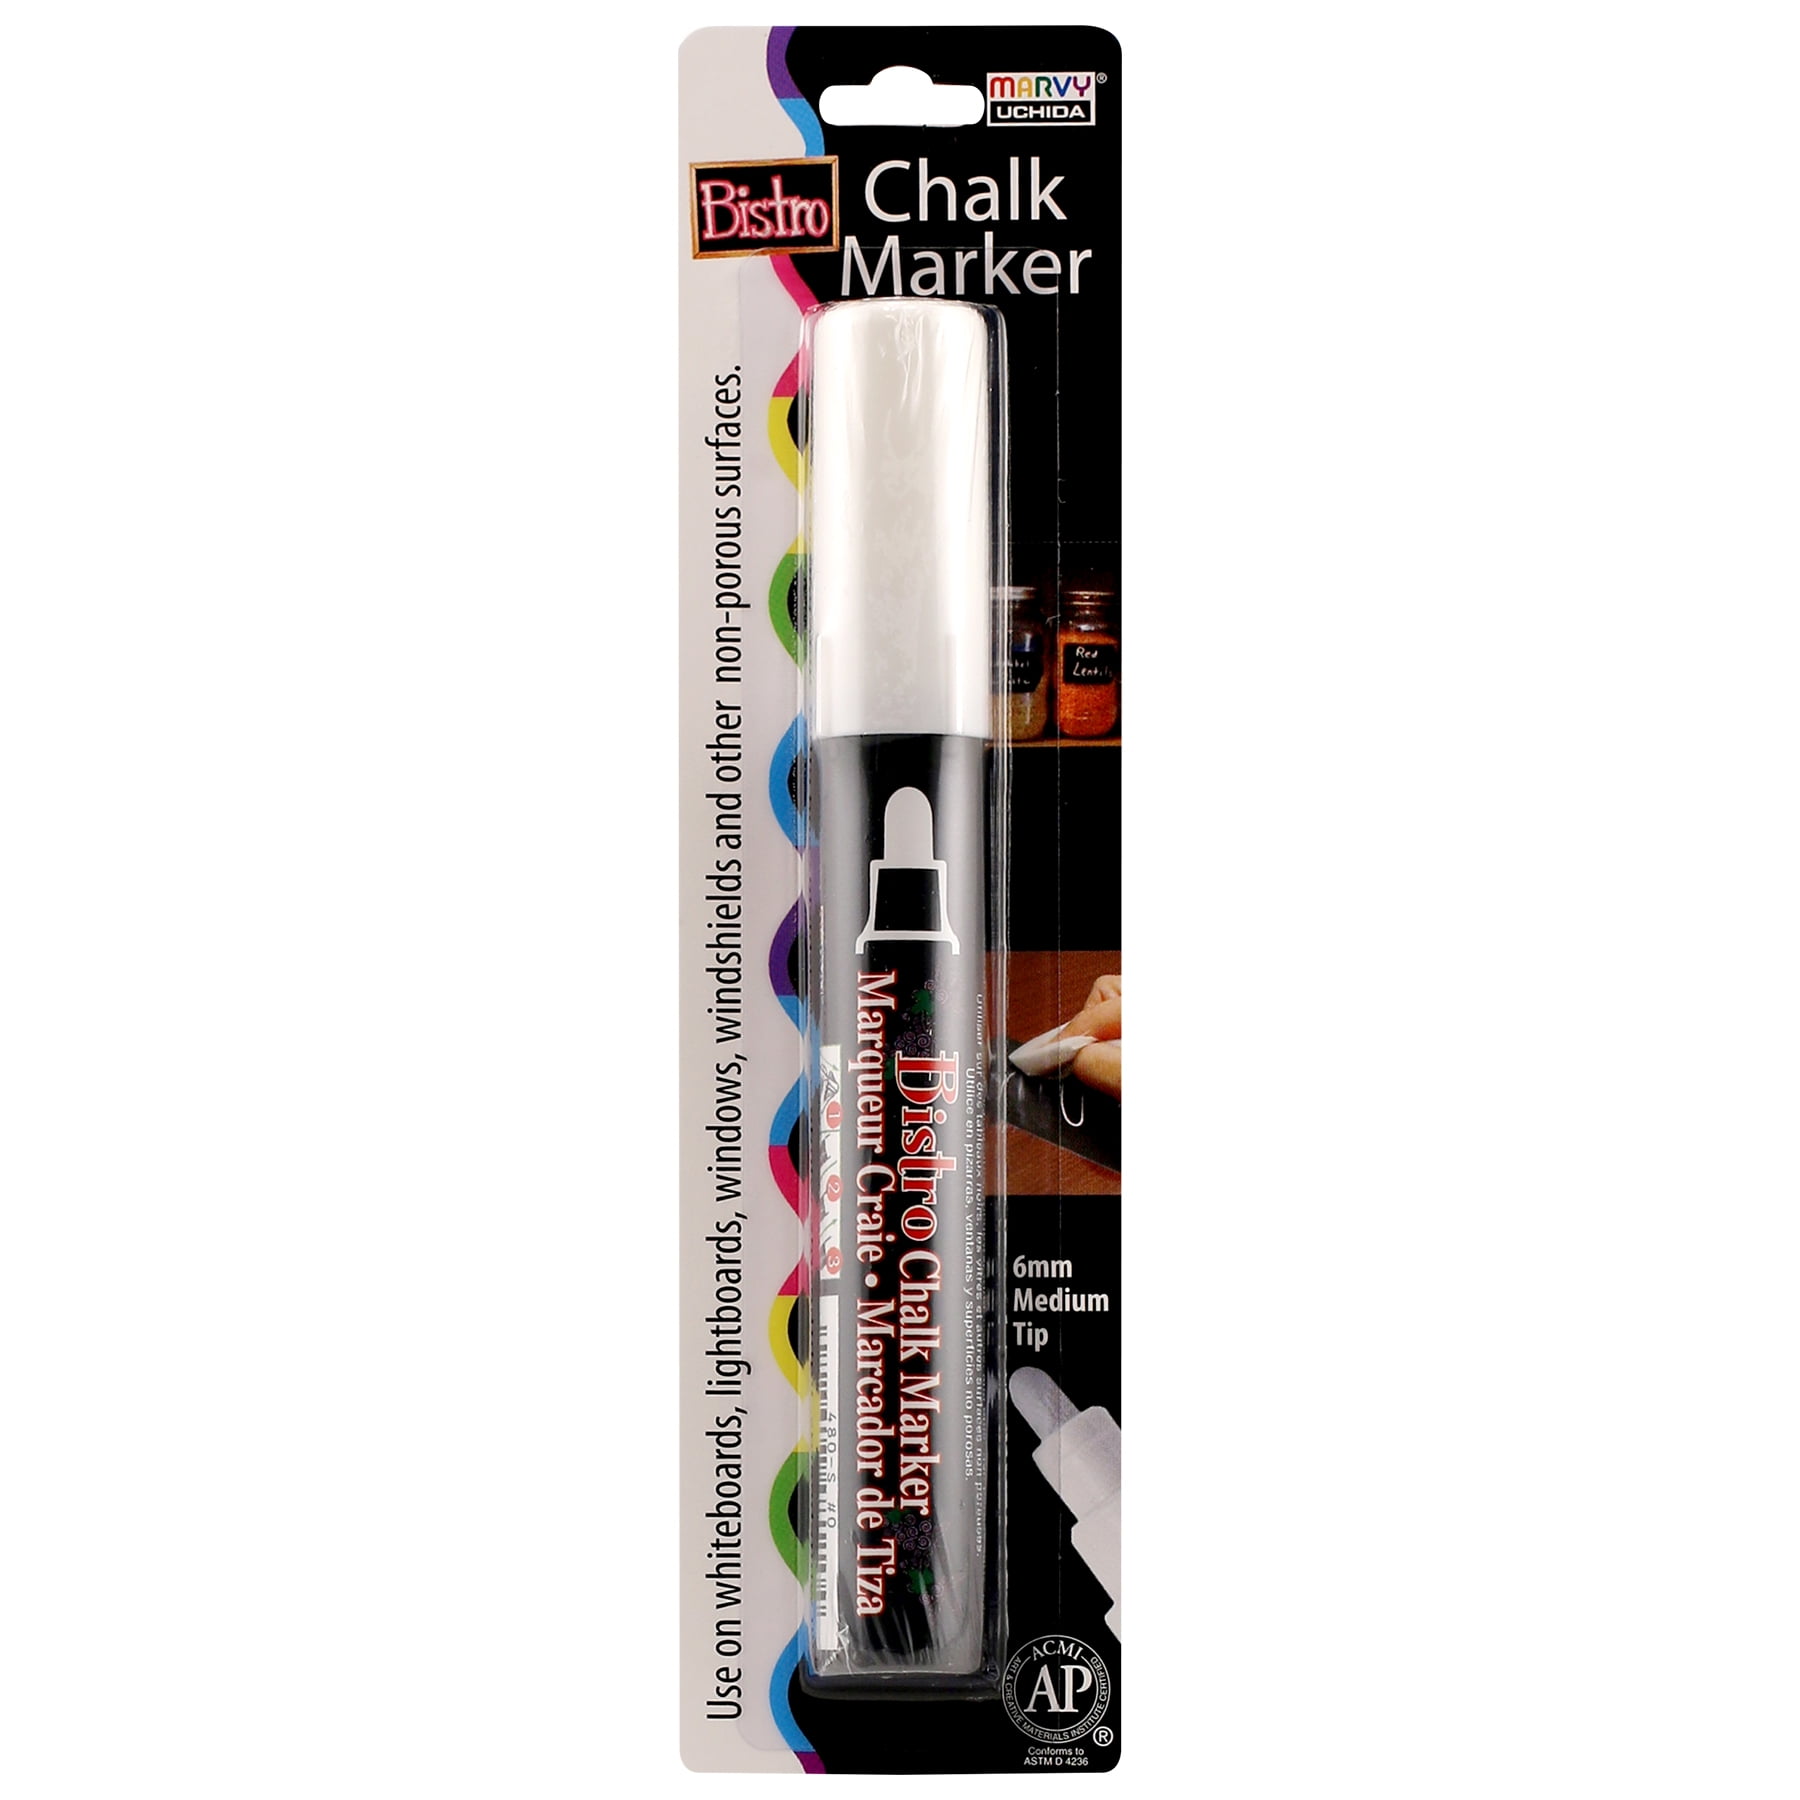 Chalk Markers, Shuttle Art 30 Vibrant Colors Liquid Chalk Markers